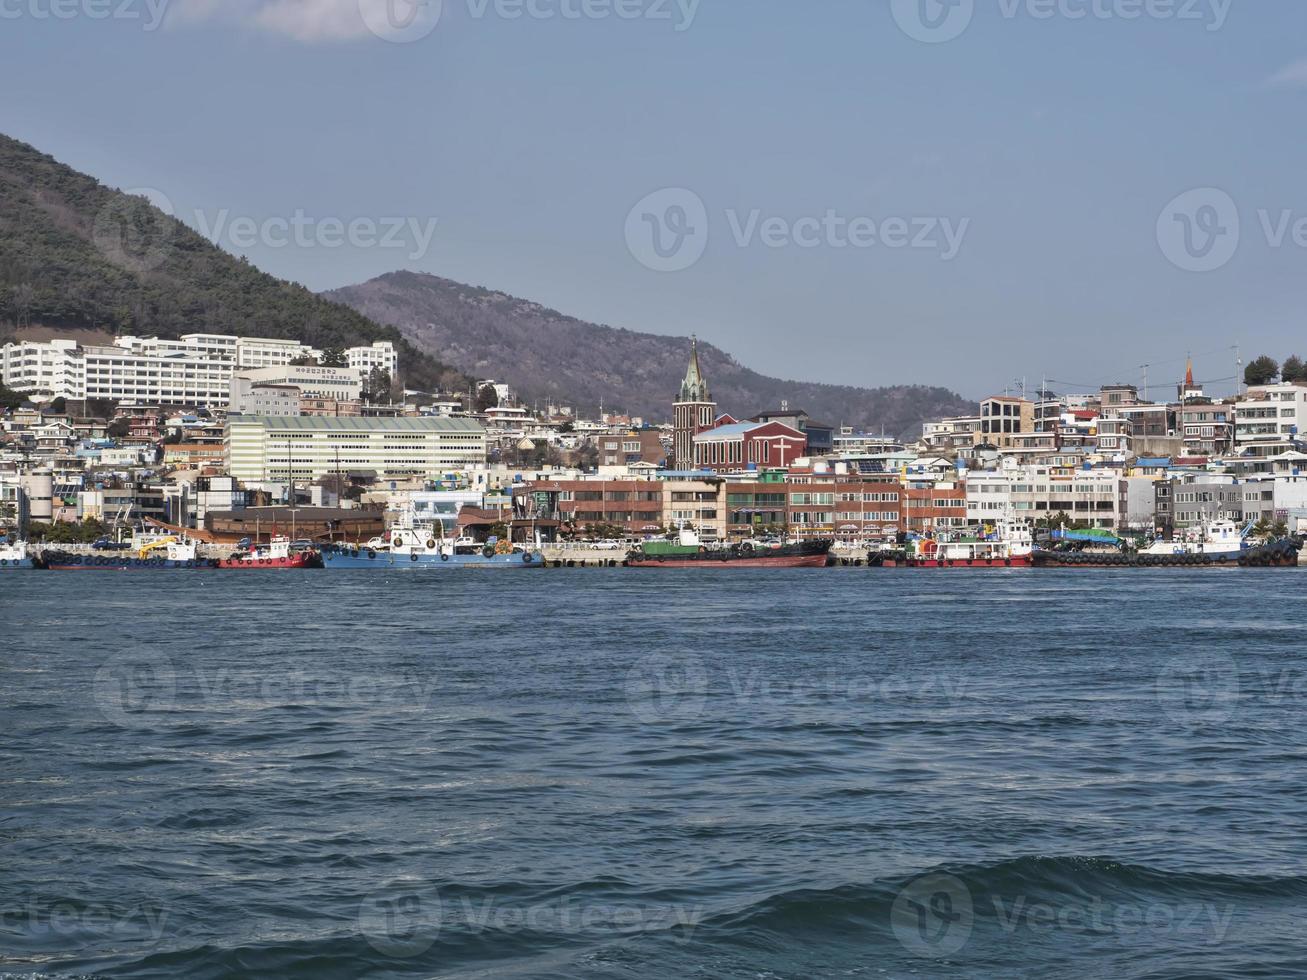 panorama do mar para a cidade de Yeosu foto